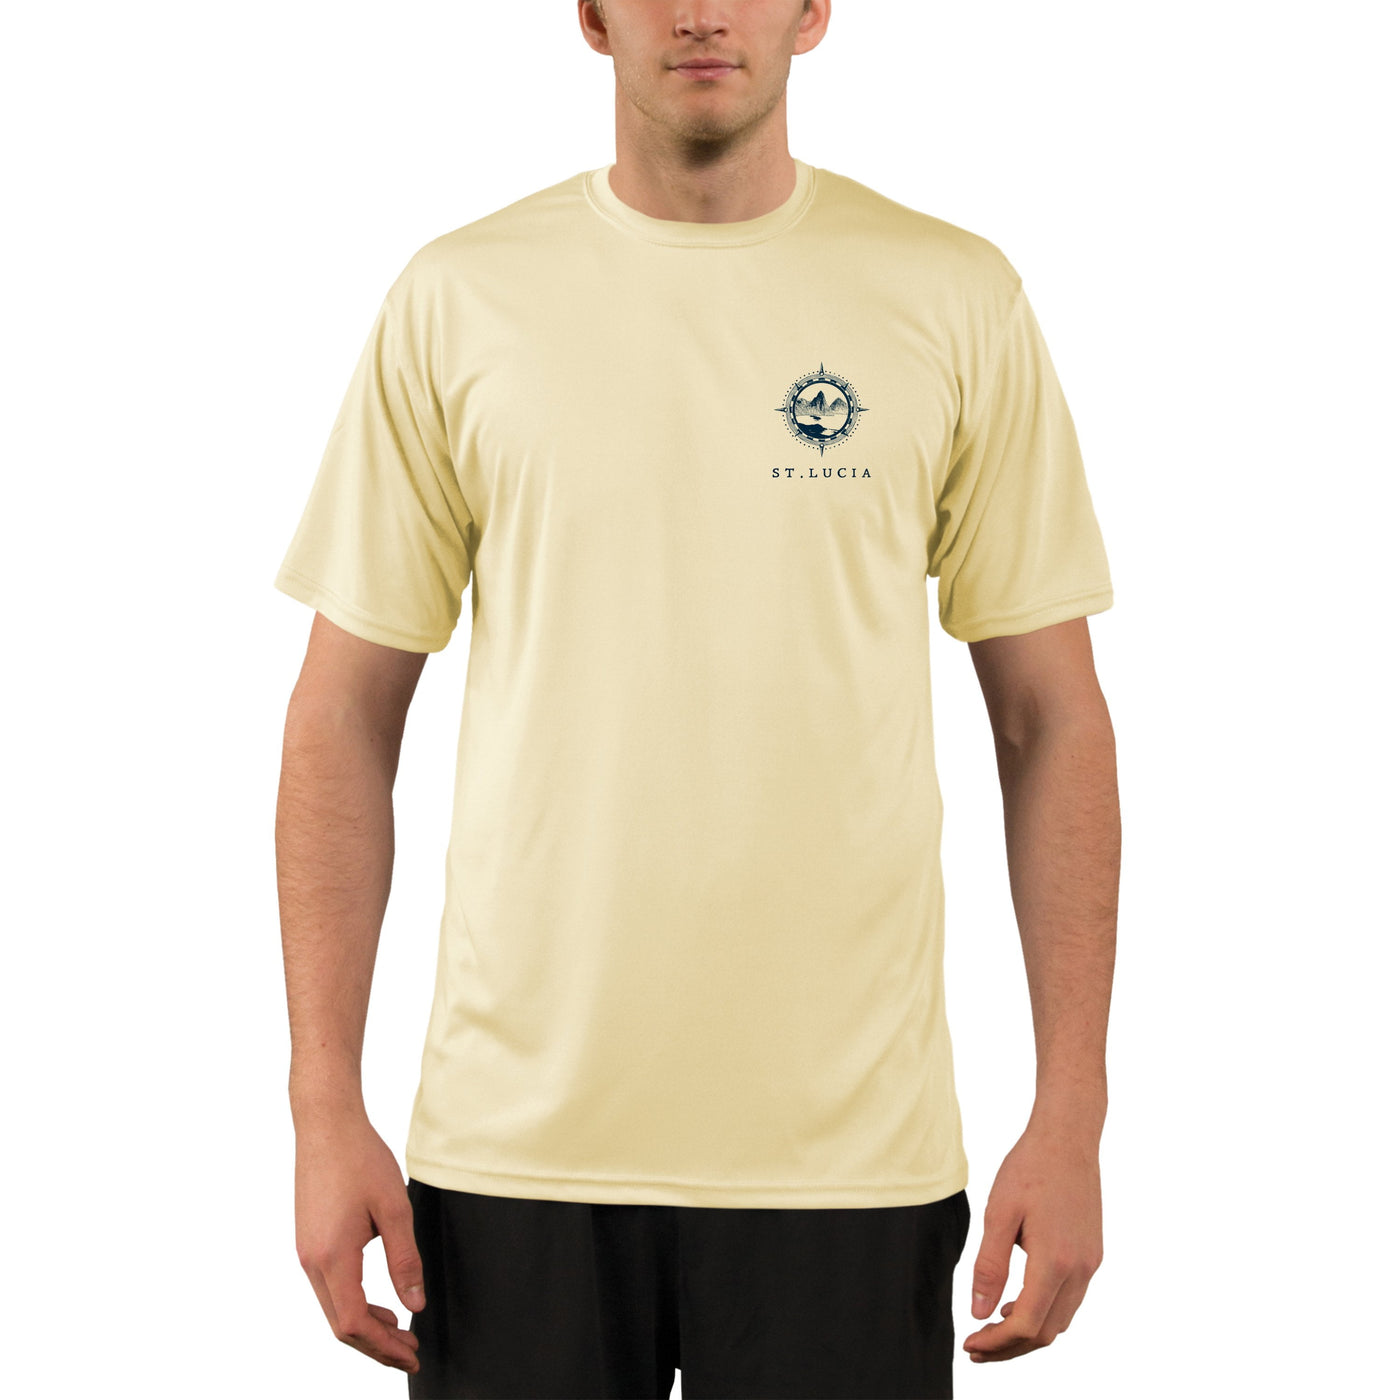 Compass Vintage St.Lucia Men's UPF 50+ Short Sleeve T-shirt